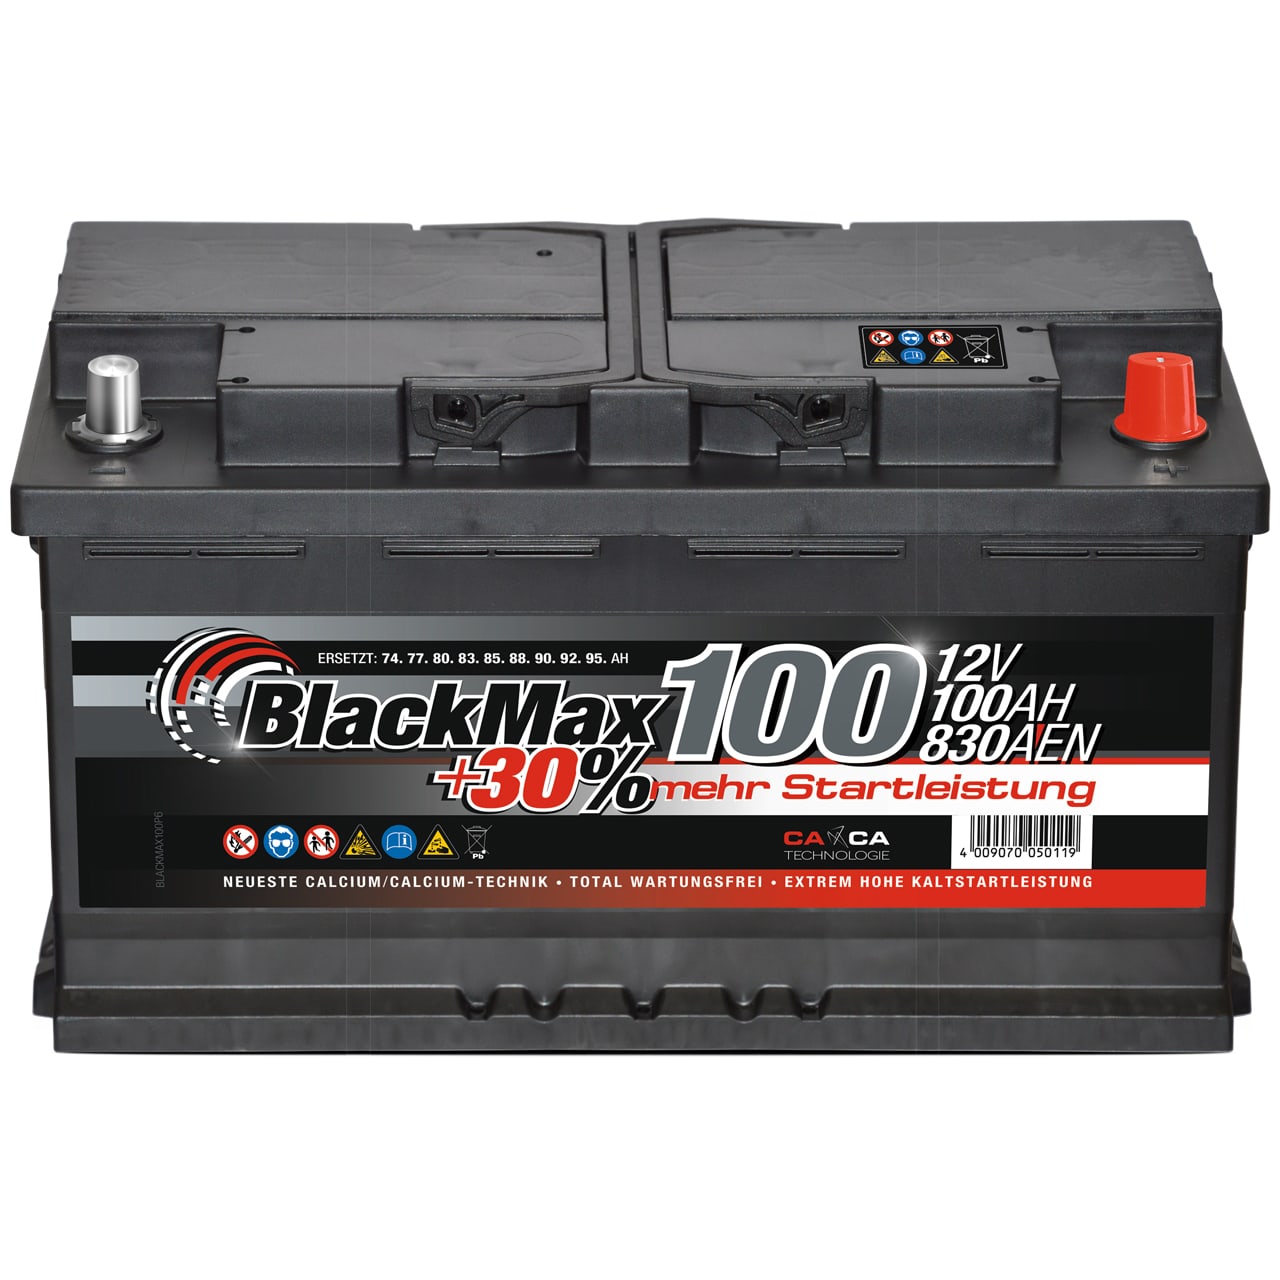 BlackMax MAX100 Plus 30 Edition Autobatterie 100Ah